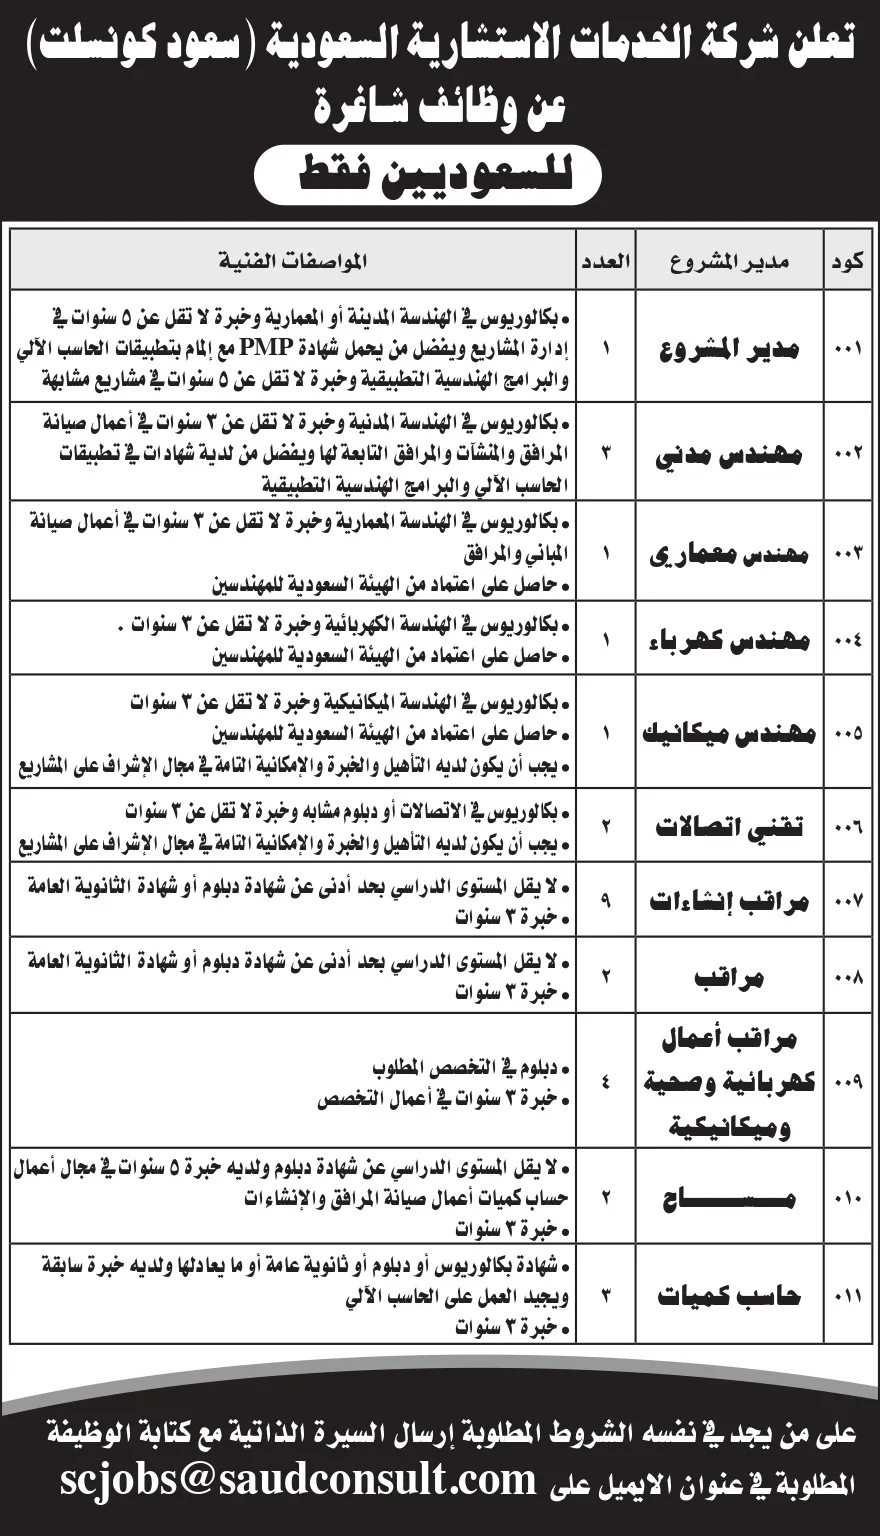 Saudi-Consulting-Services-Riyadh-Jobs-12-Jan-2023